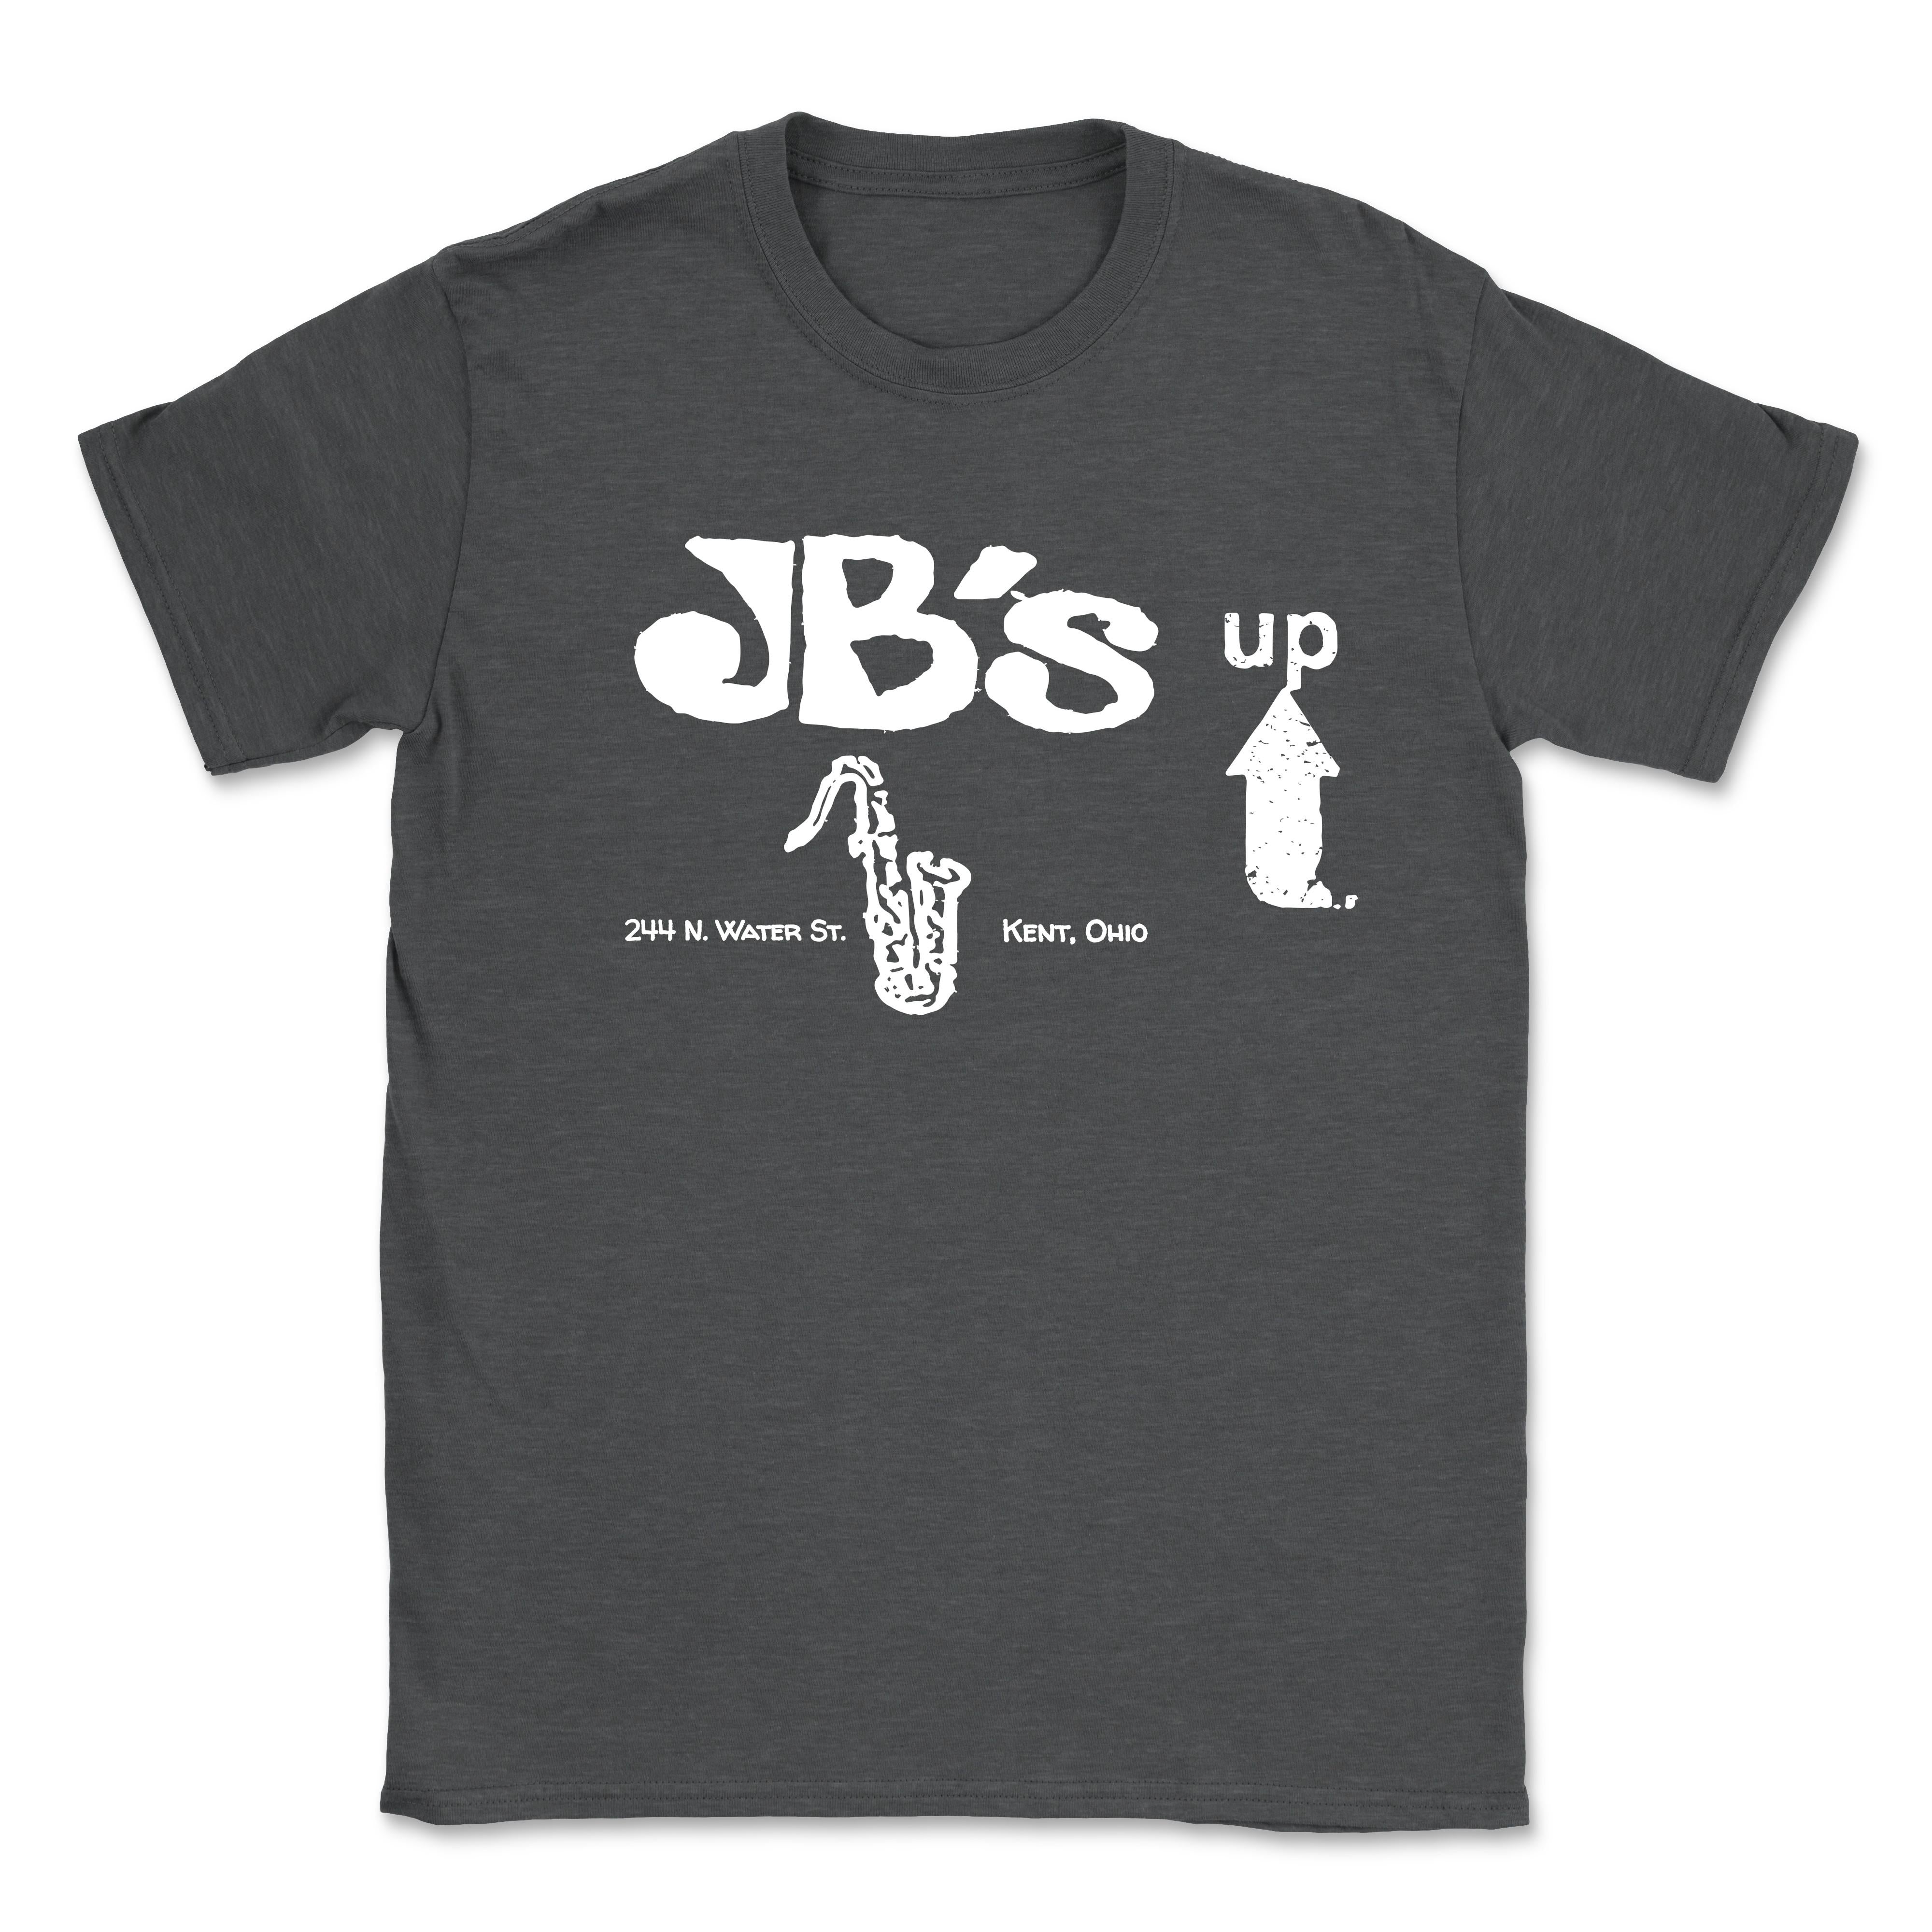 Kent  Jbs Up Gray T-Shirt